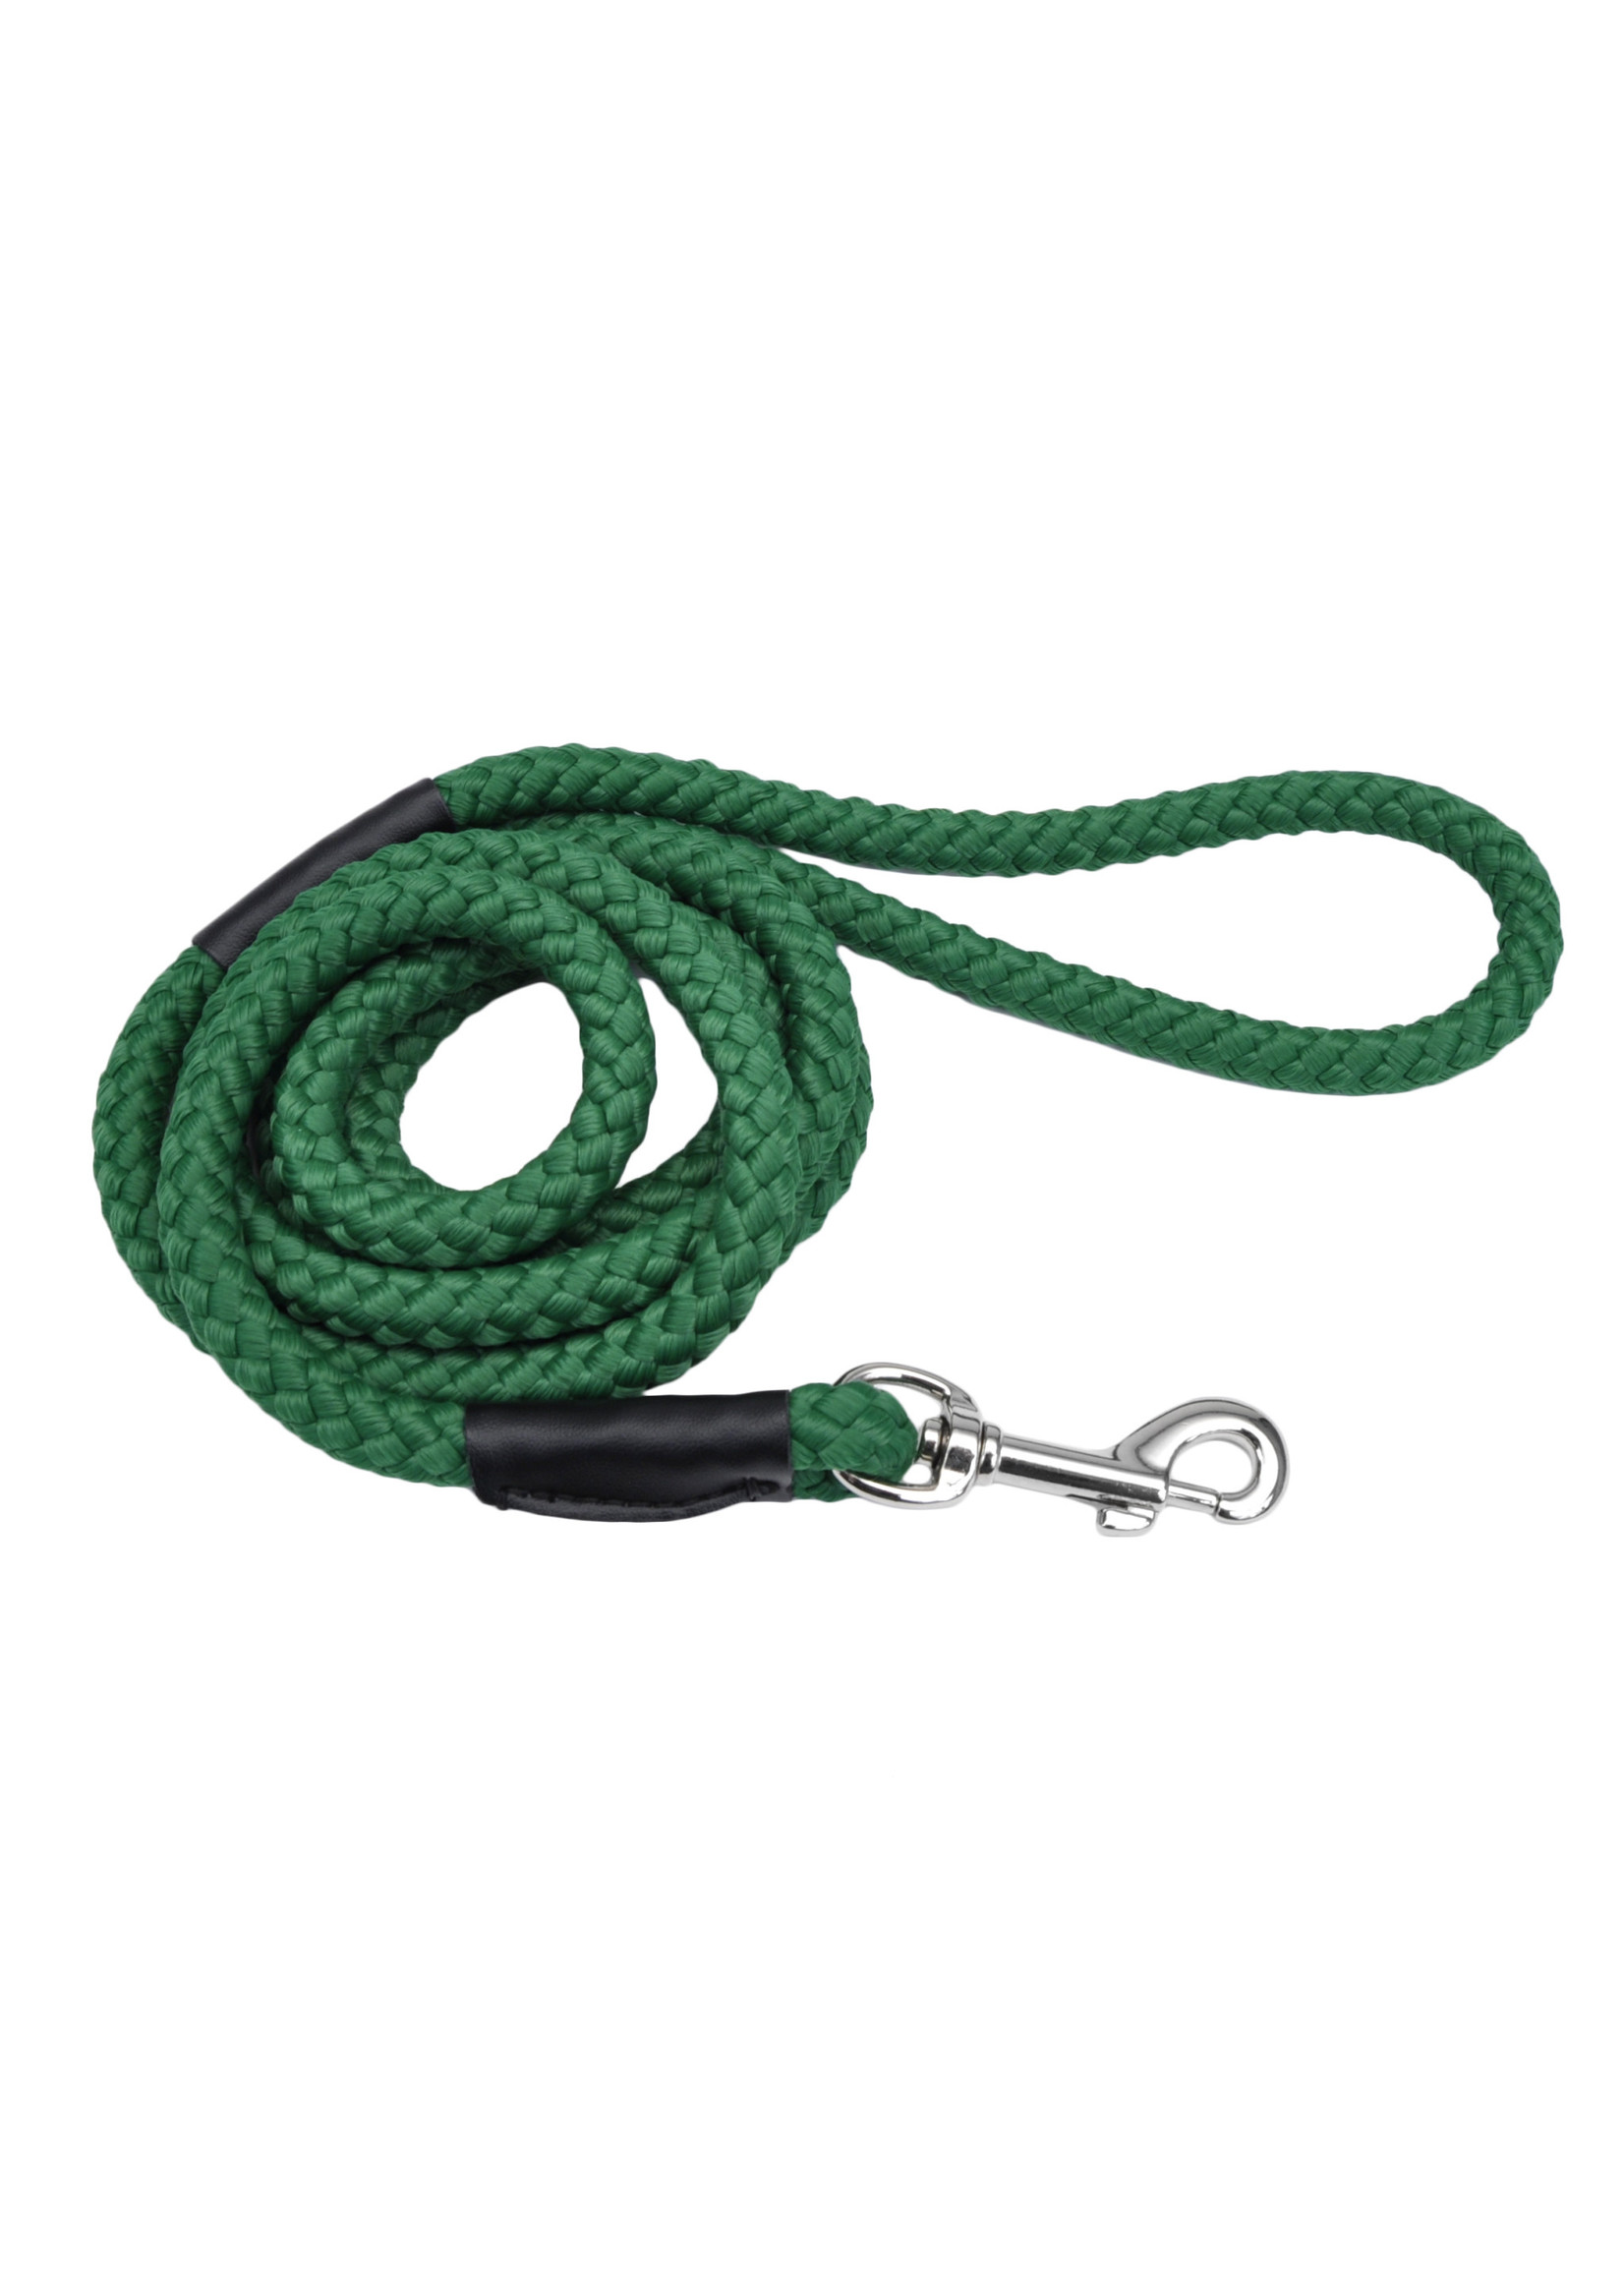 Coastal Pet Coastal Green Rope Dog Leash 6 ft 00206